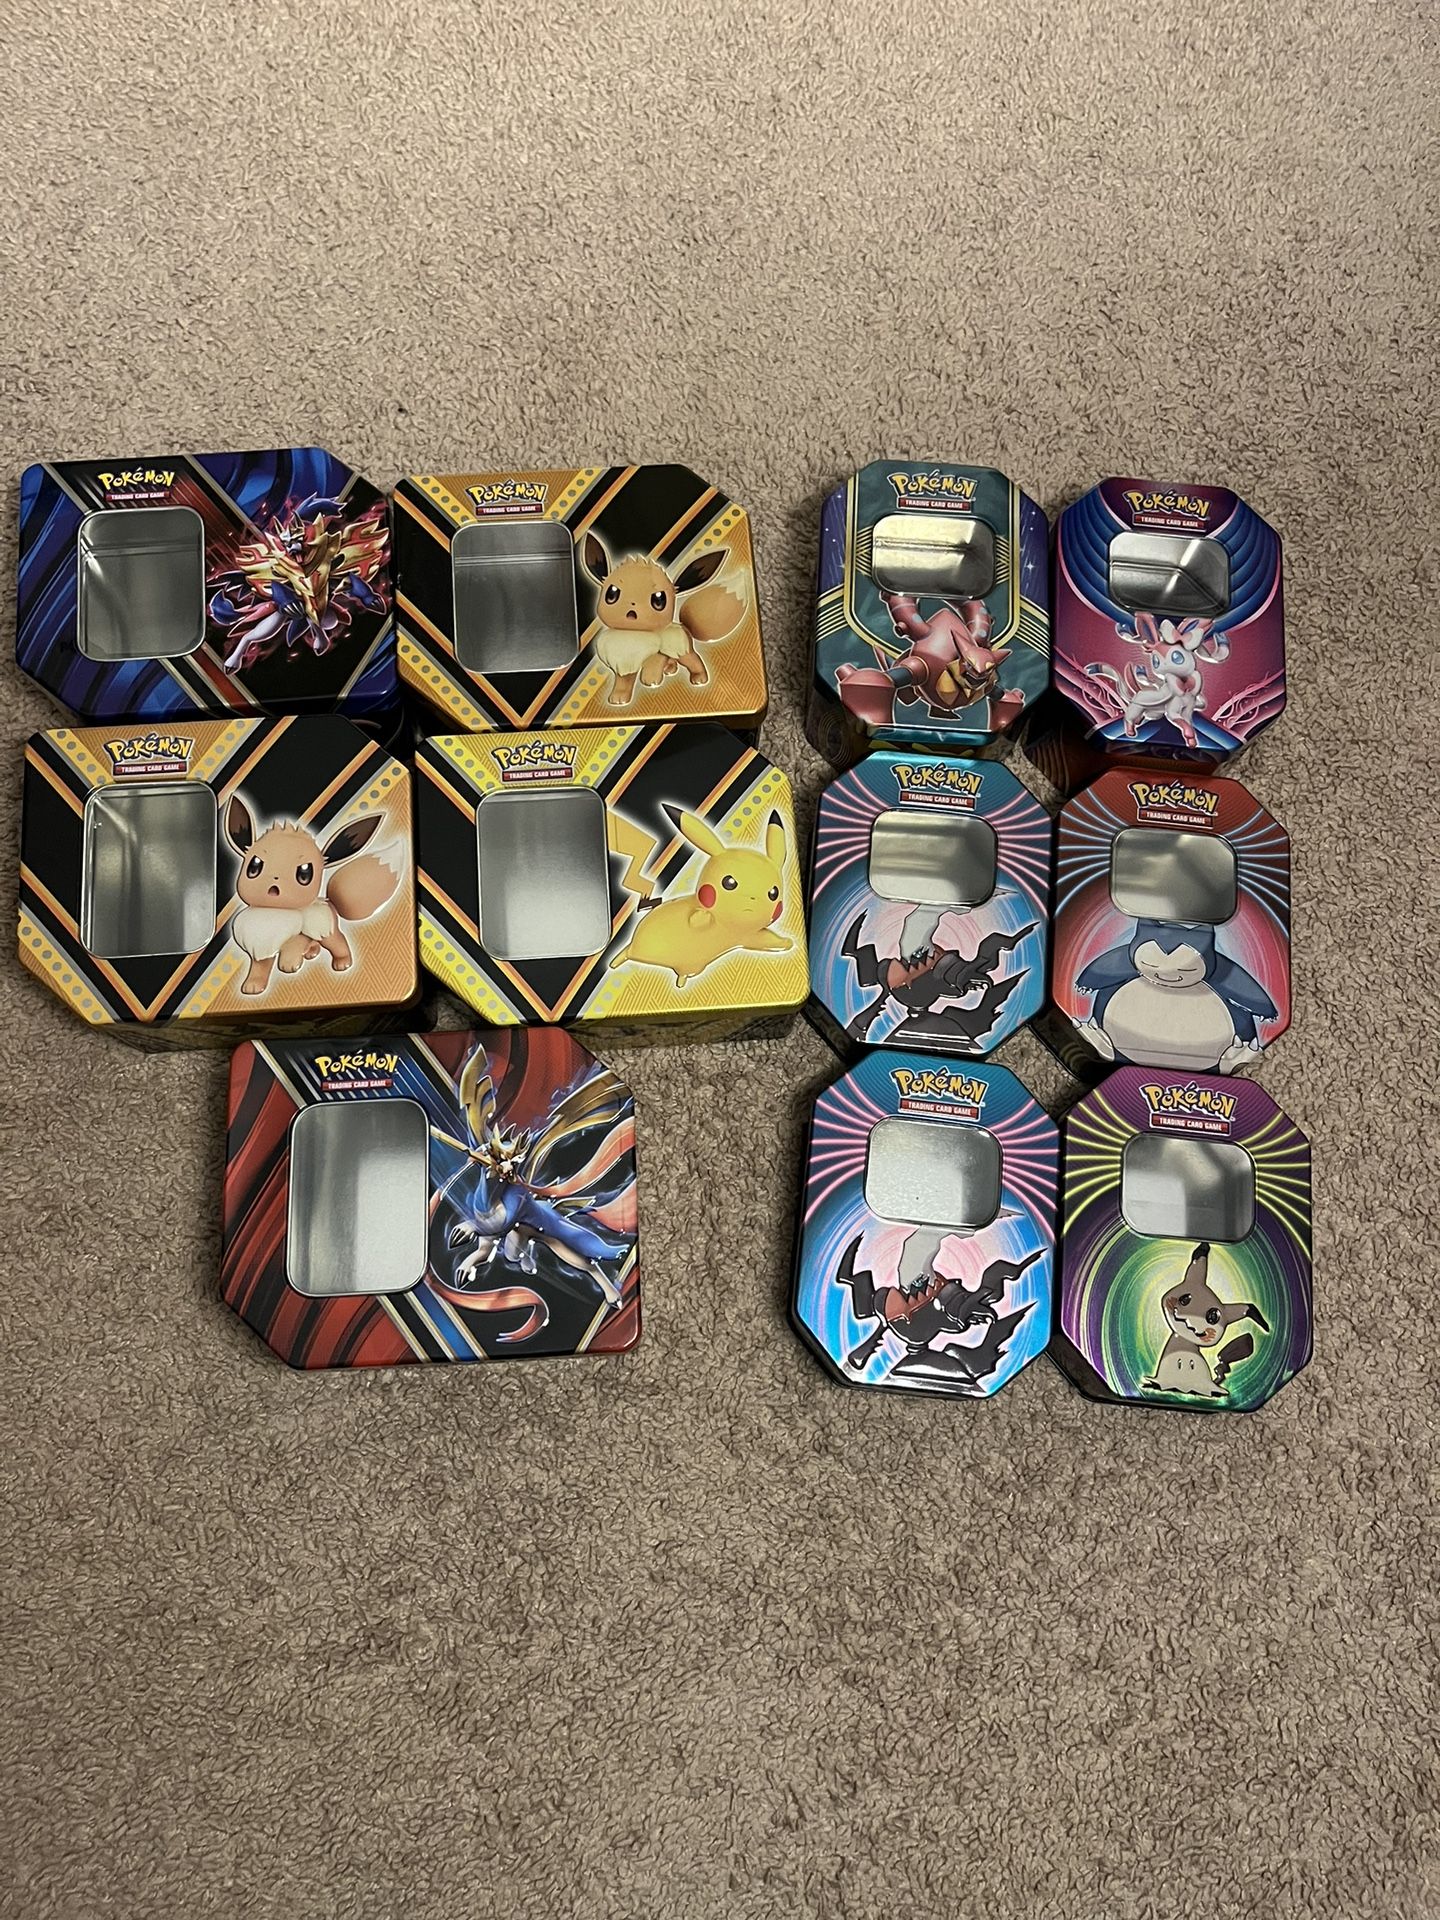 11 Pokémon Tins